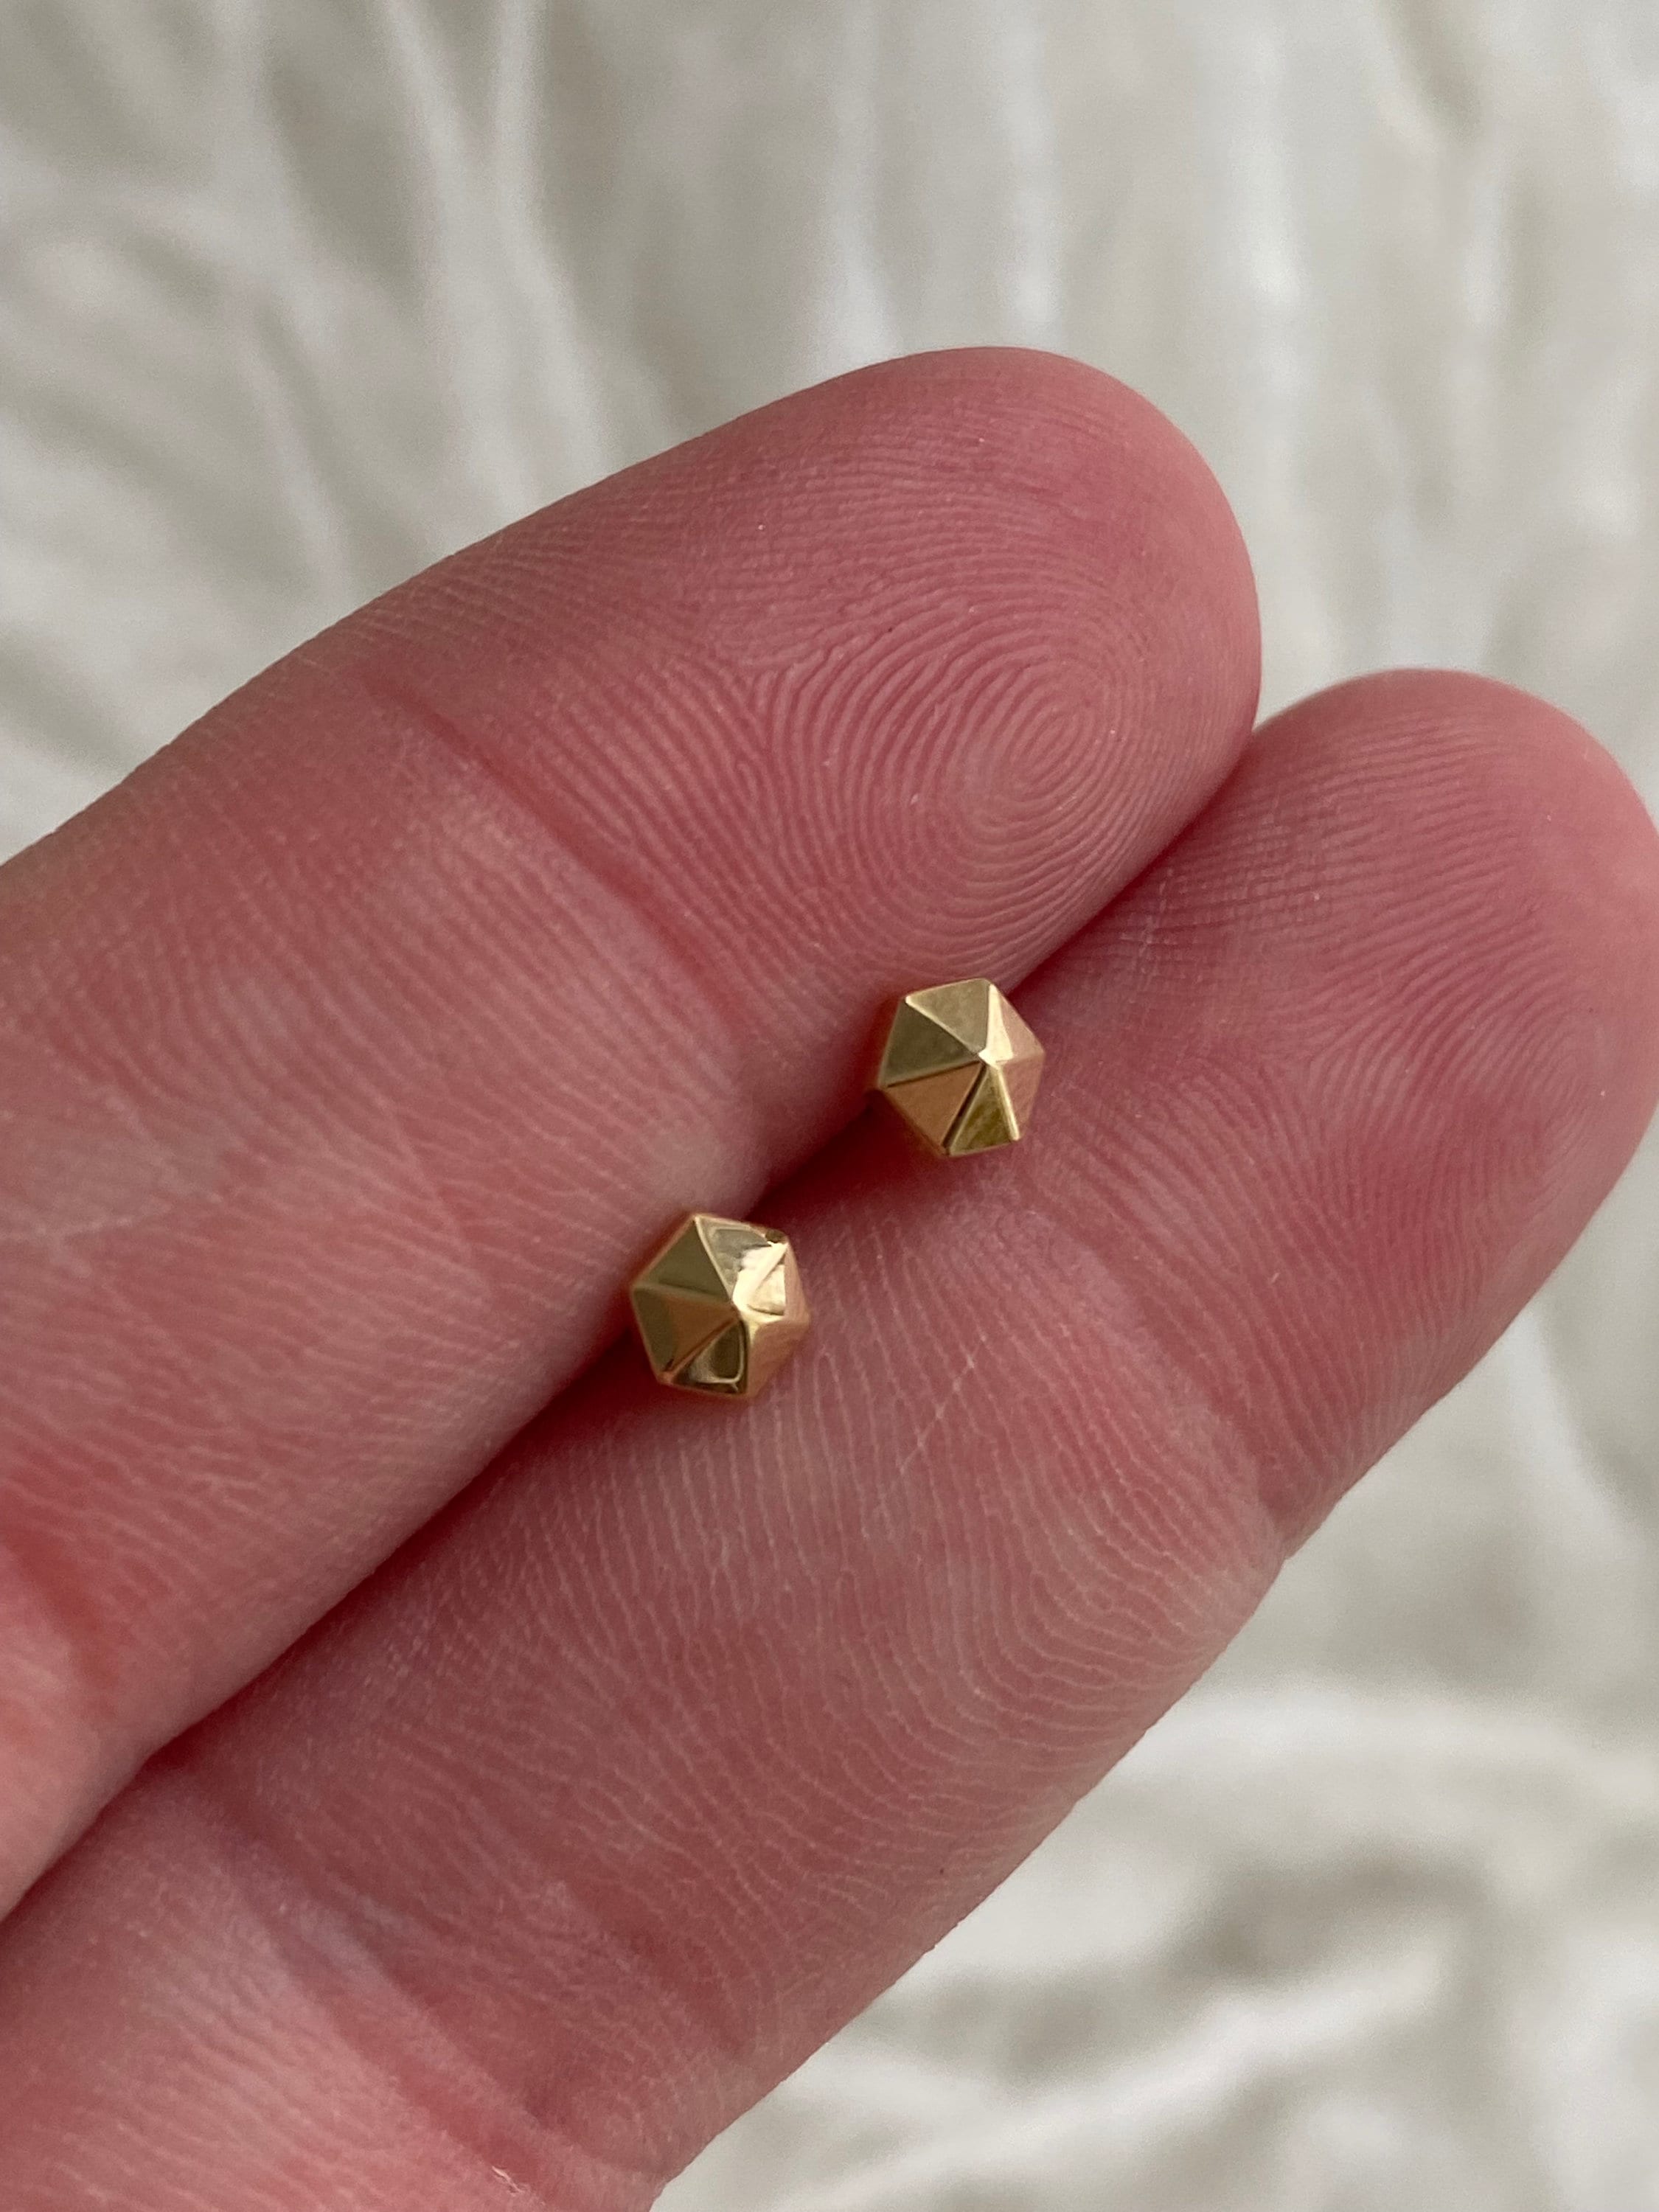 Hexagon Stud Earrings, Solid 14K Gold Hexagon Studs, Geometric Earrings, Small Gold Studs.